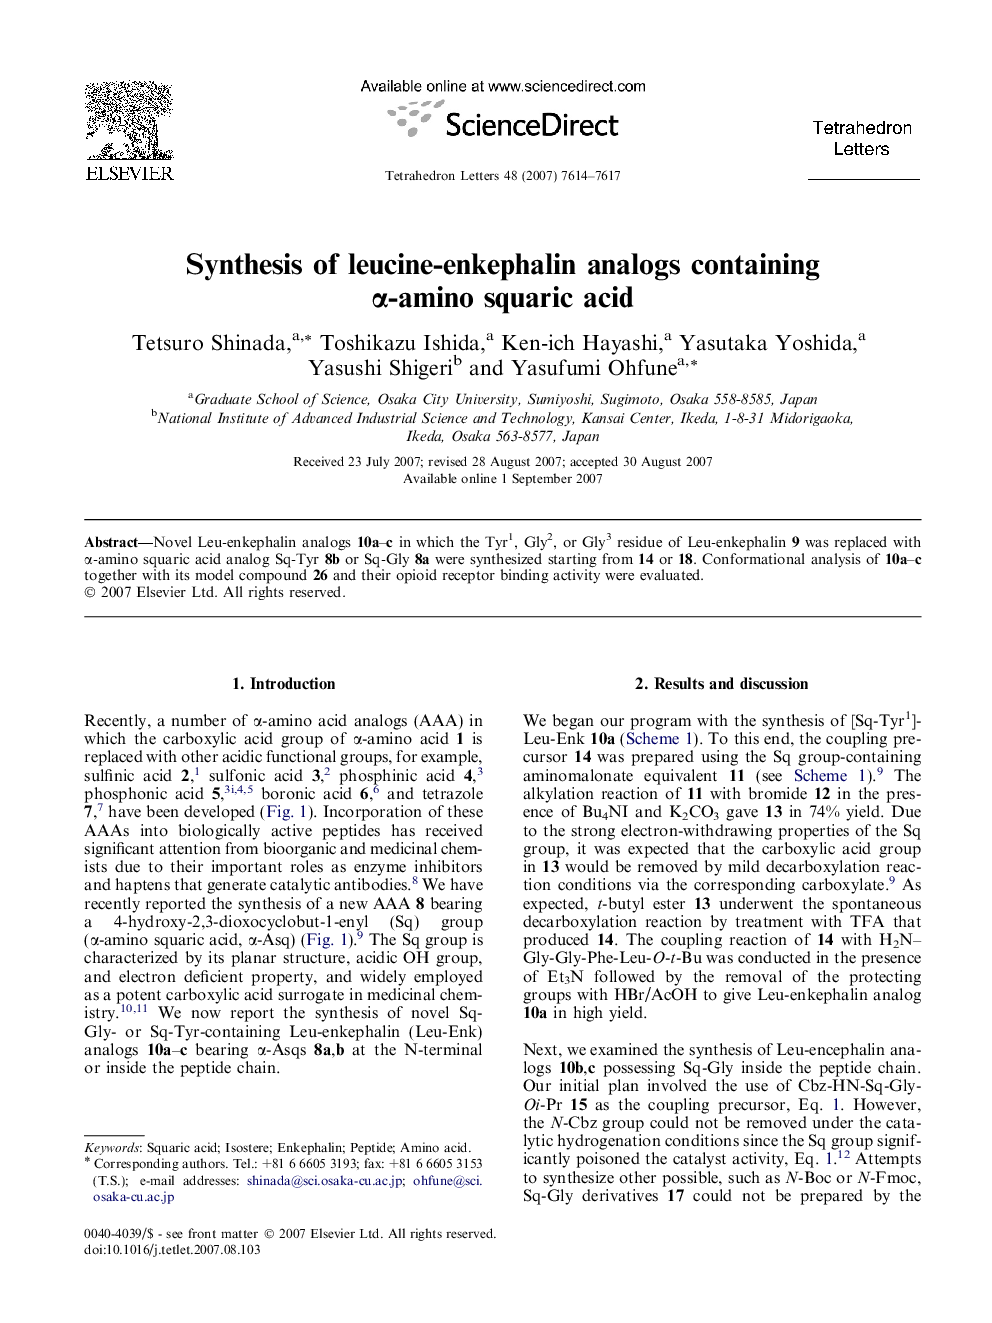 Synthesis of leucine-enkephalin analogs containing Î±-amino squaric acid